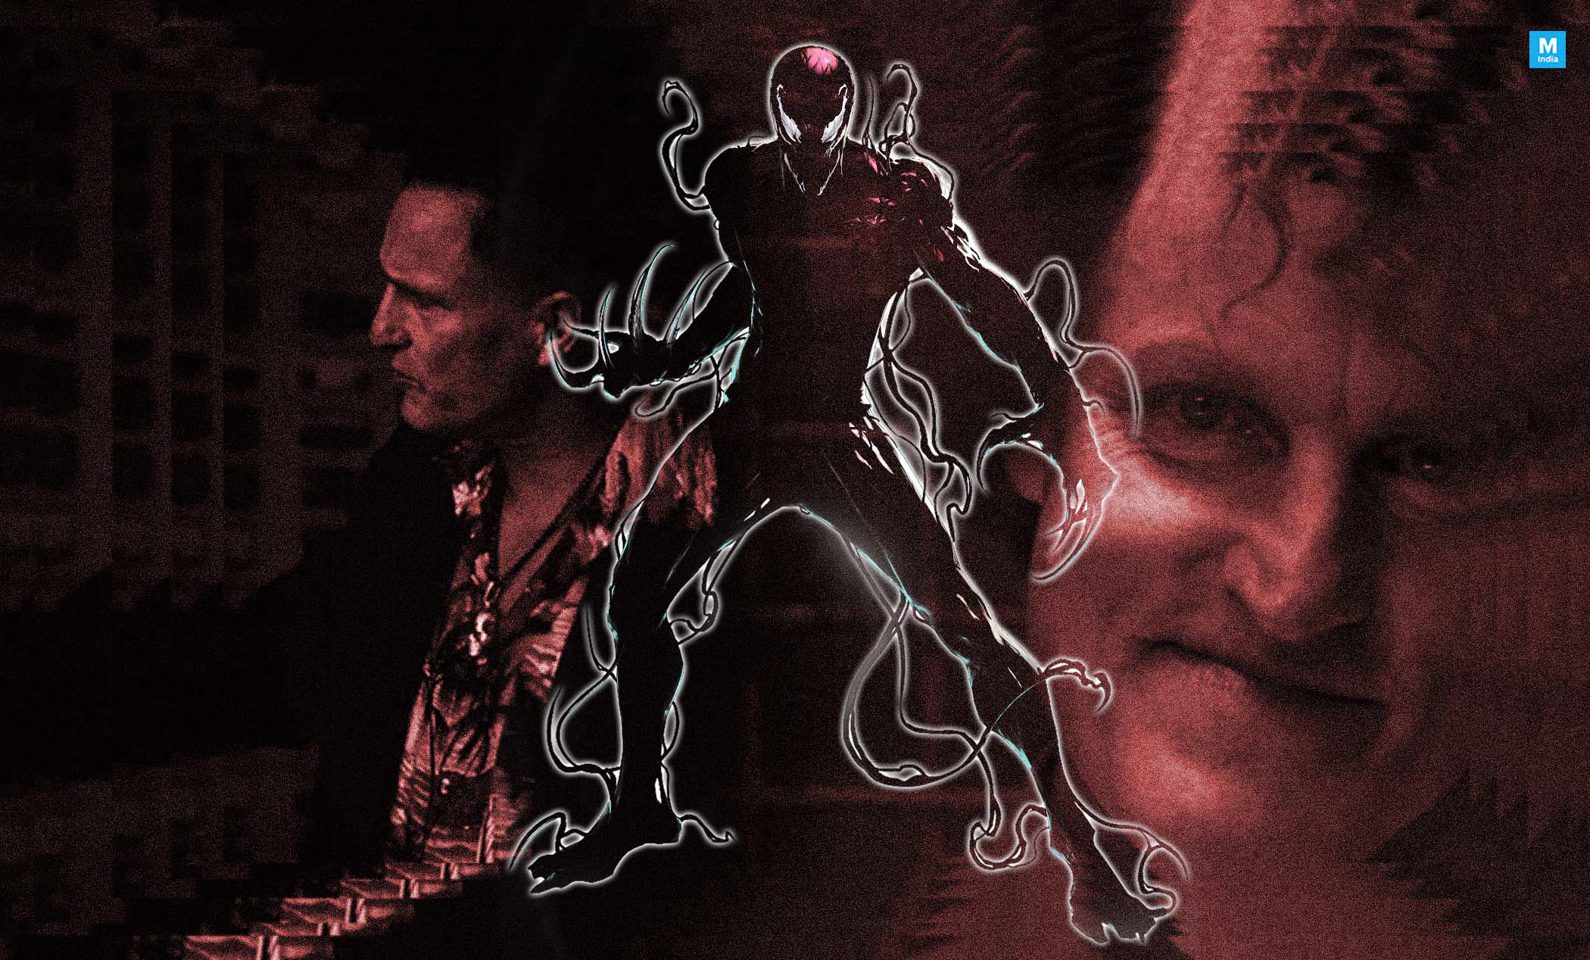 Woody Harrelson As Carnage In Venom Movie Wallpapers